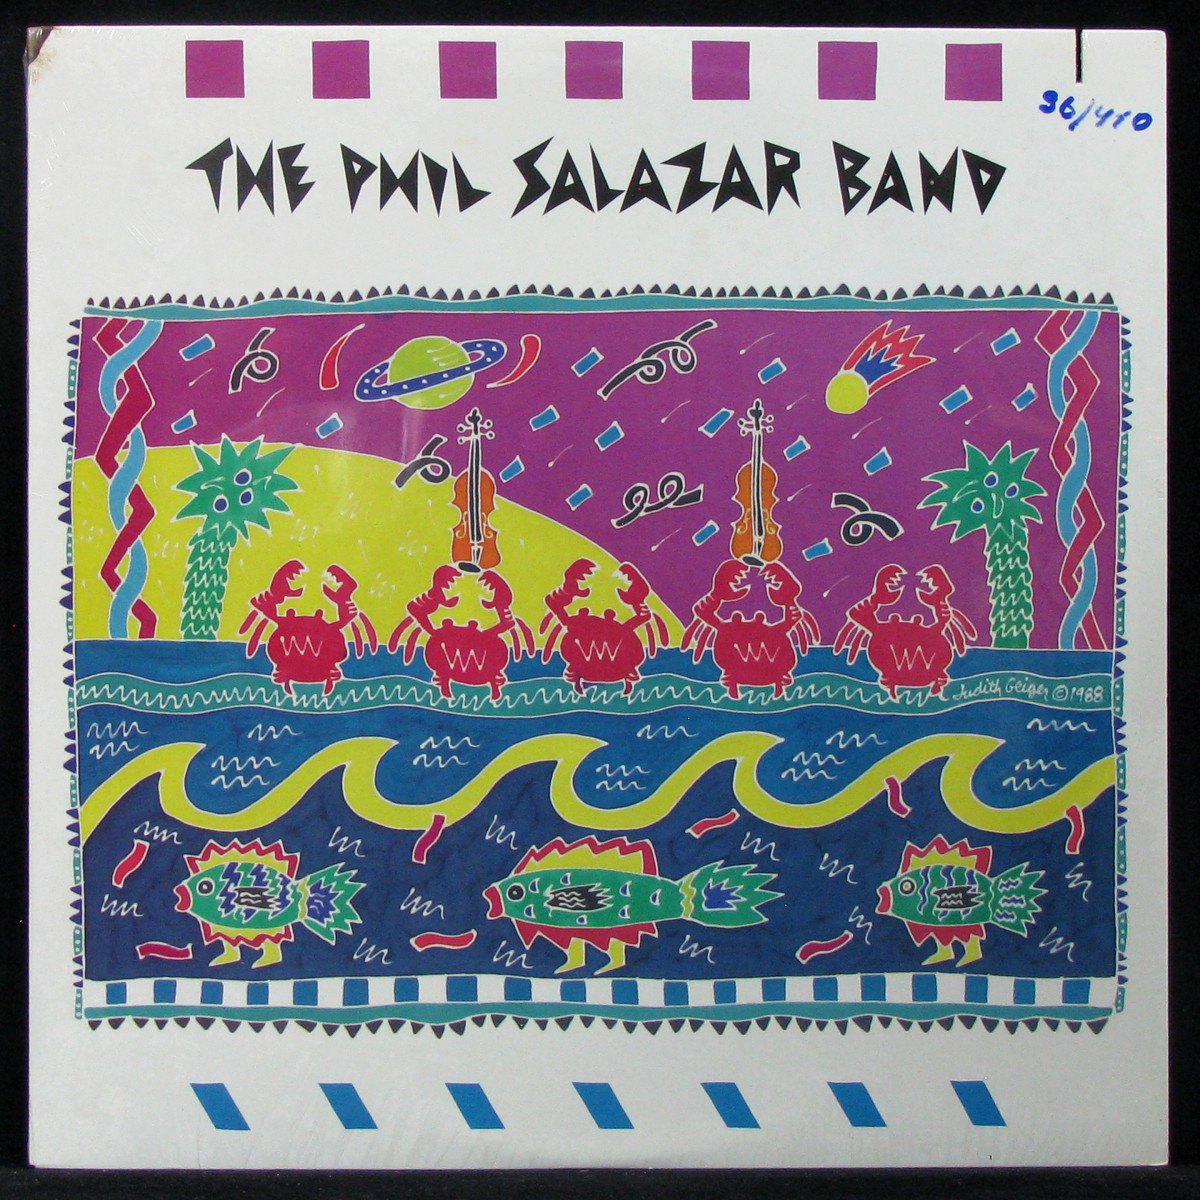 Phil Salazar Band